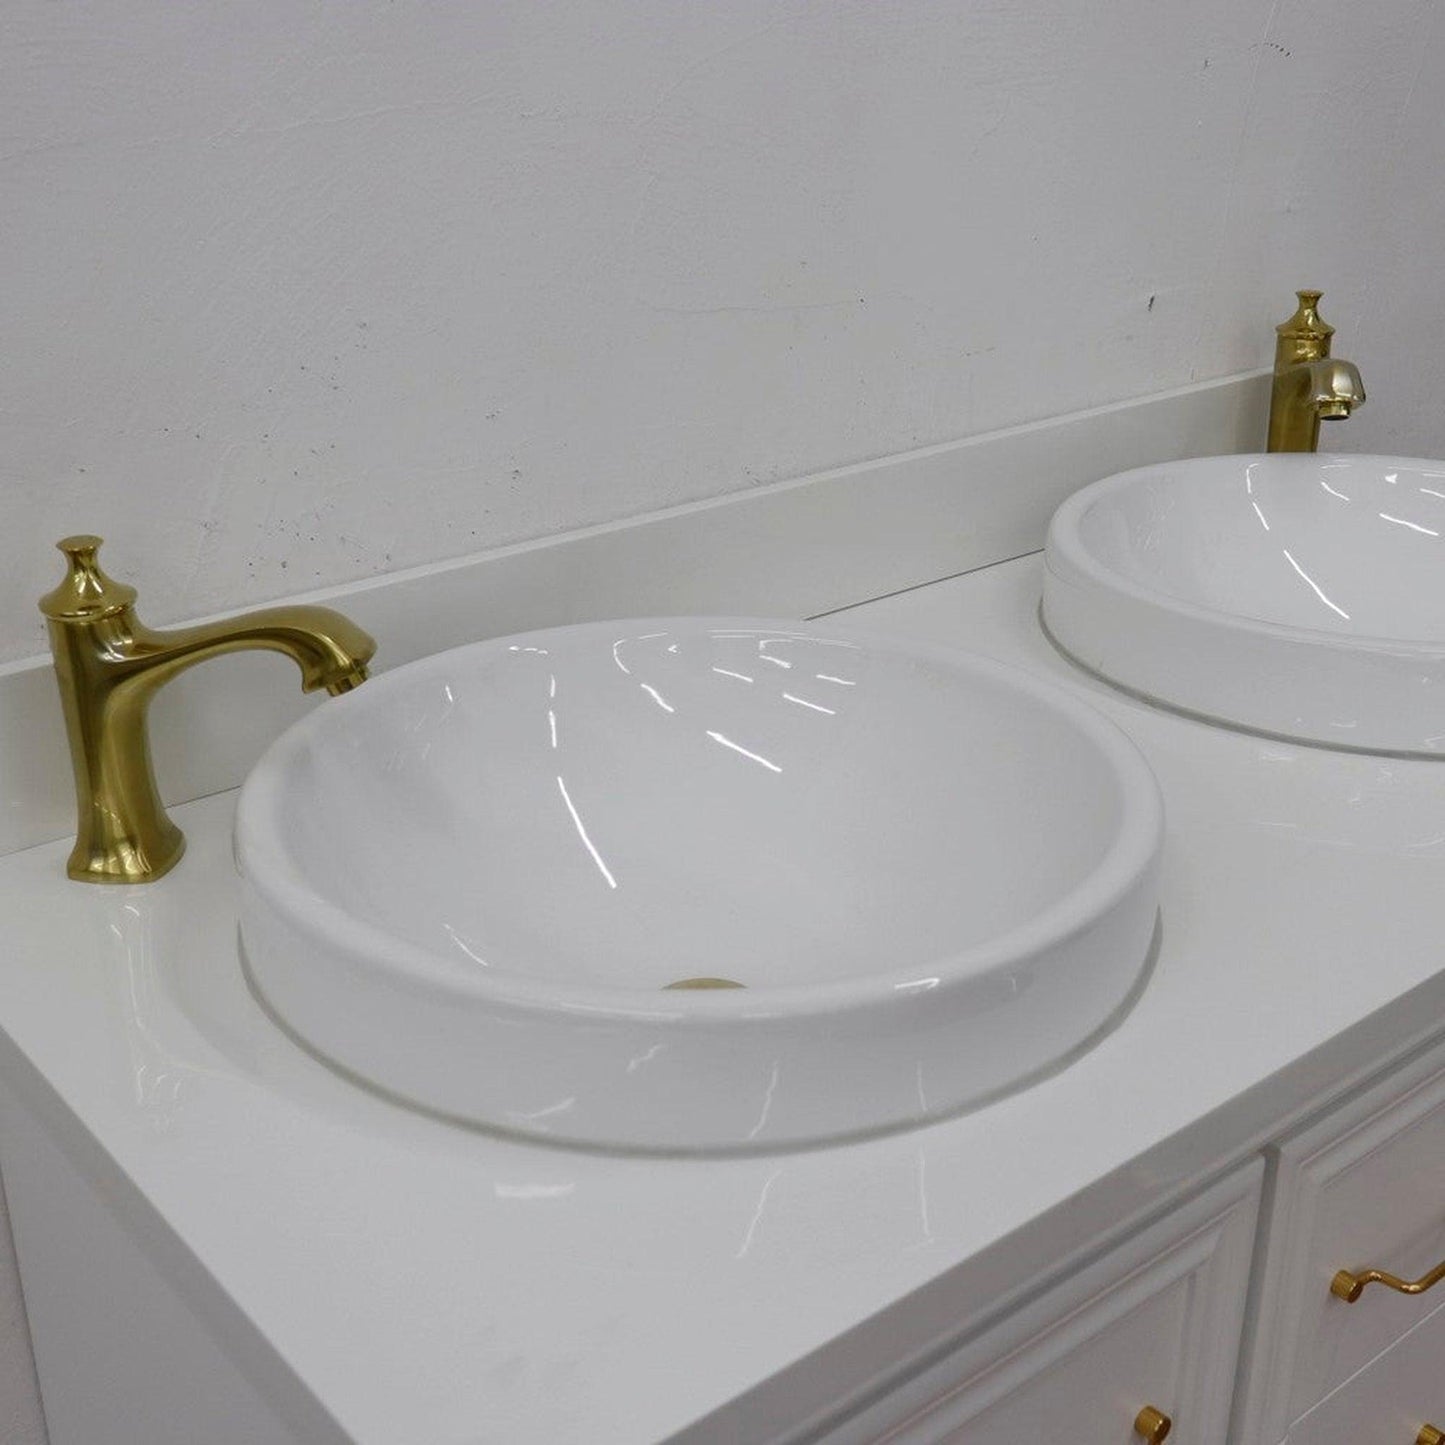 Bellaterra Home Forli 49" 2-Door 3-Drawer White Freestanding Vanity Set With Ceramic Double Vessel Sink and White Quartz Top